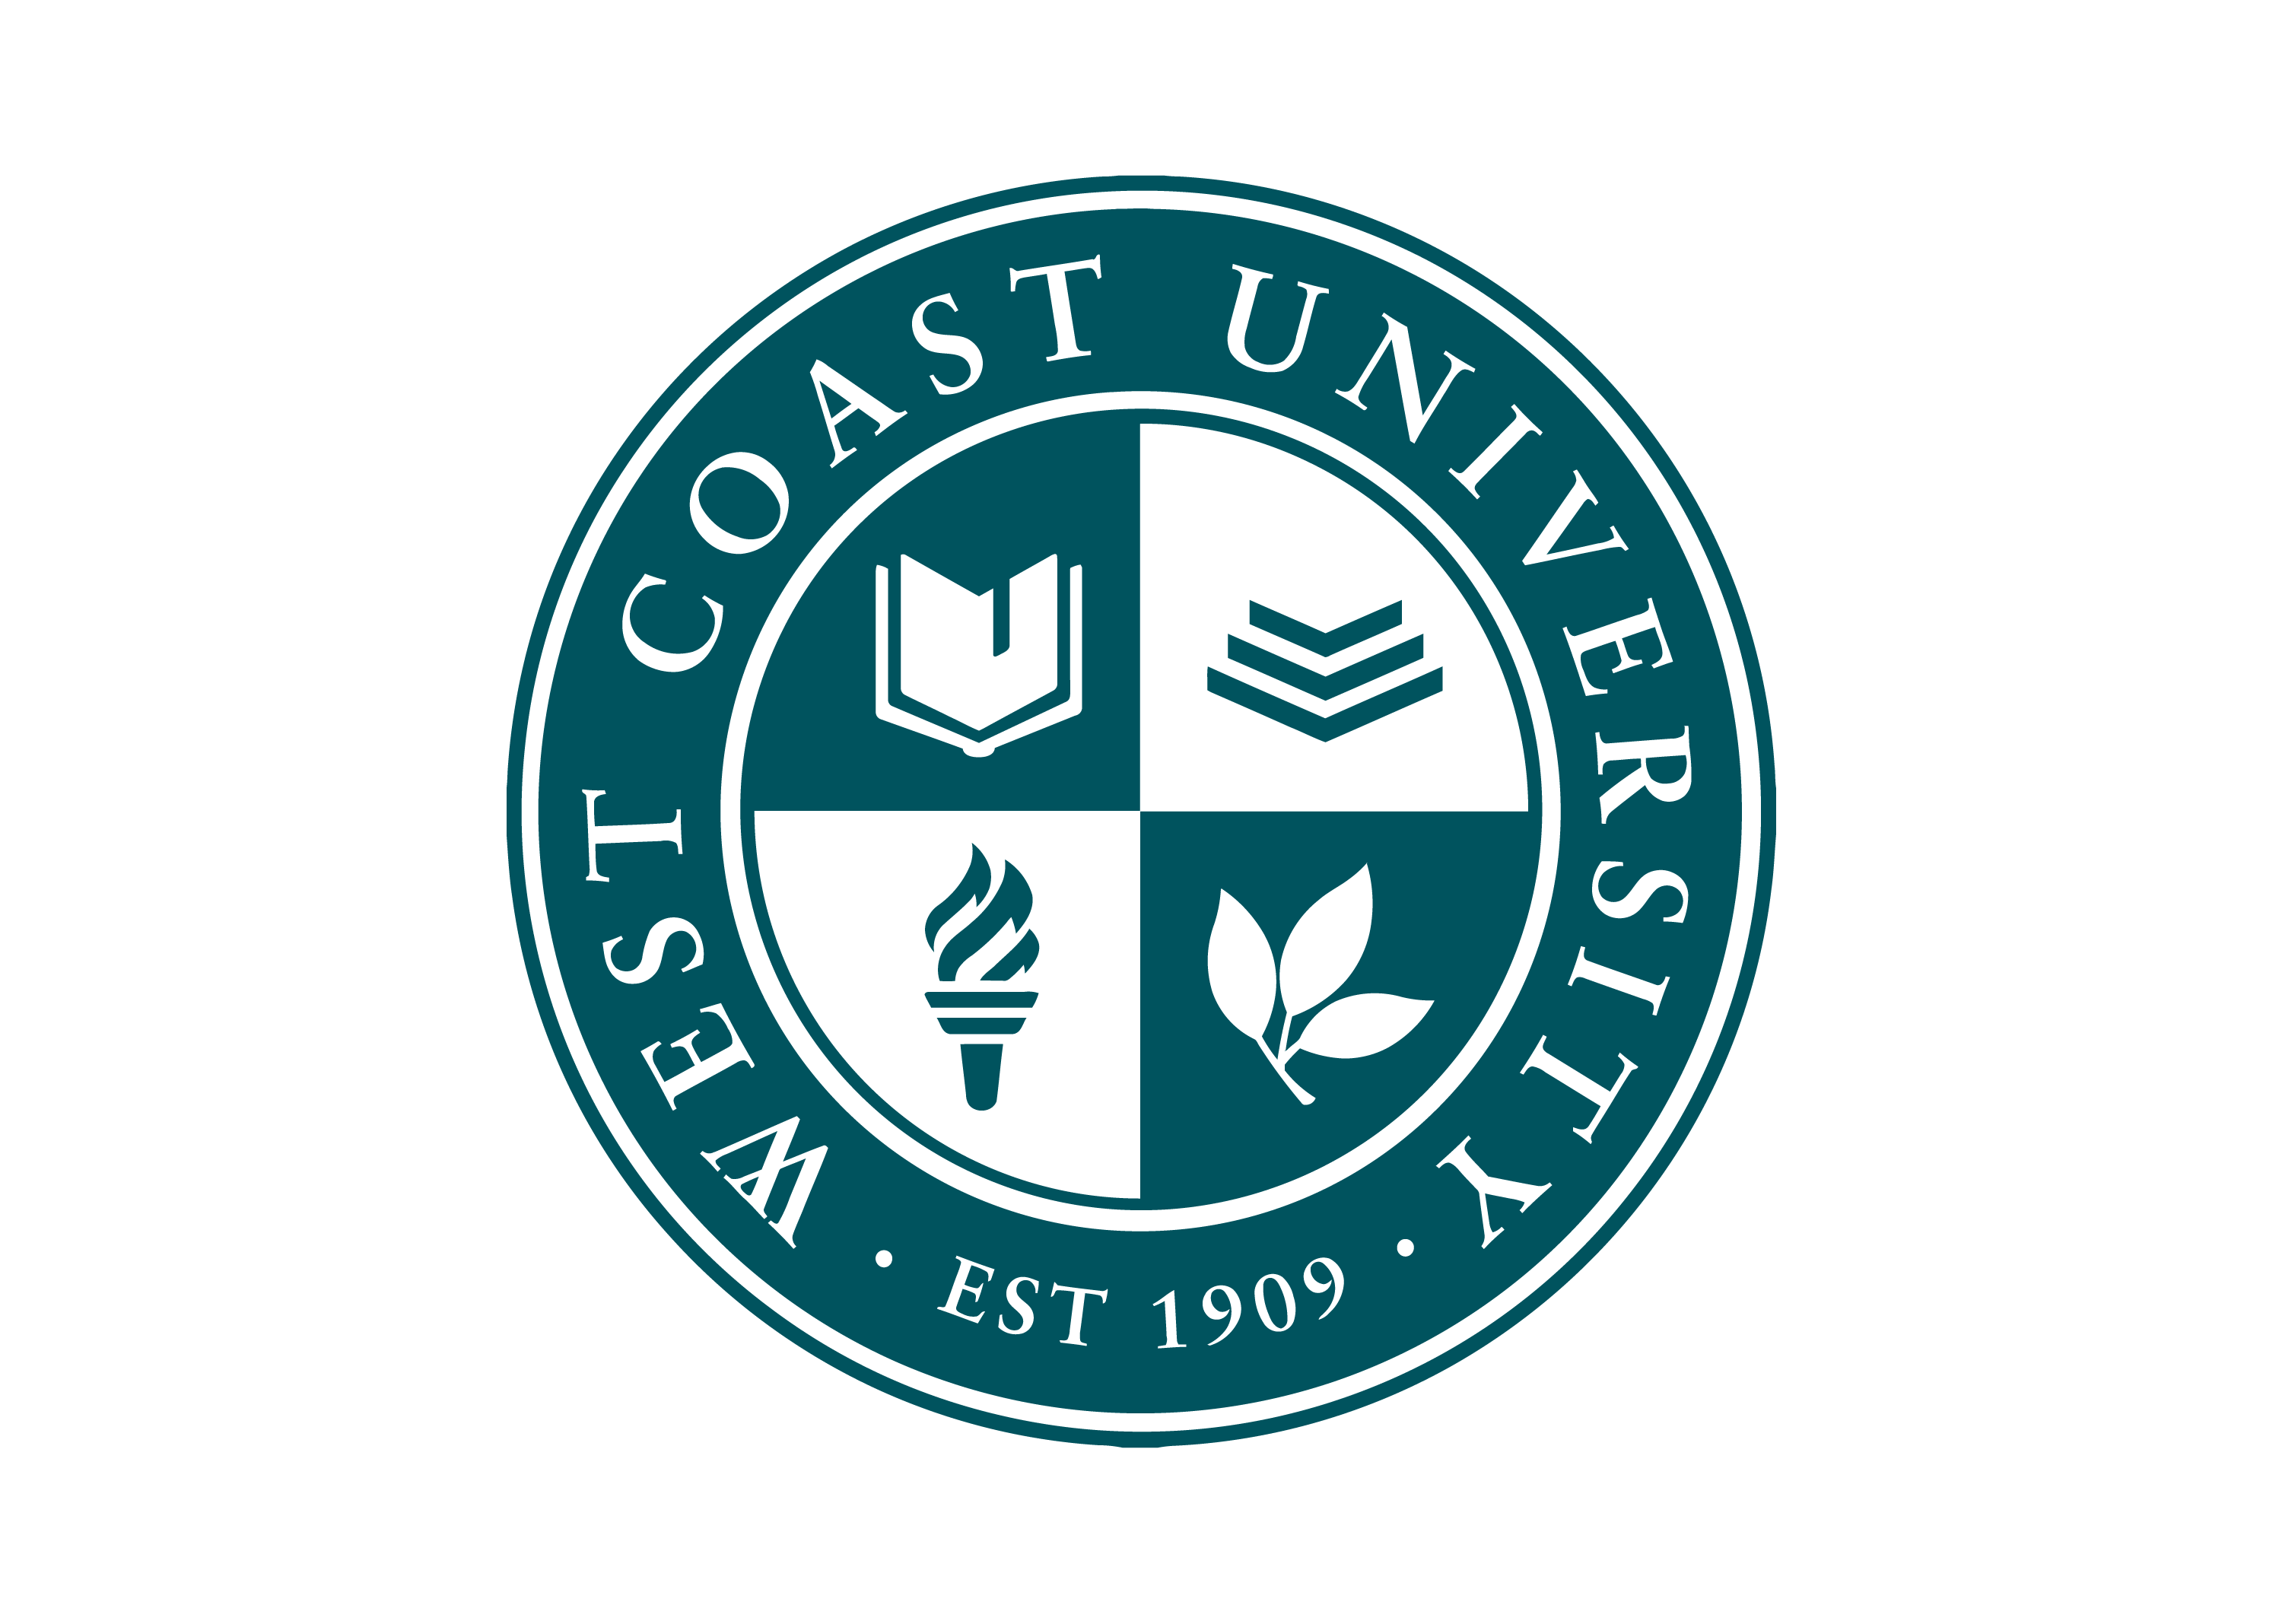 VCU West Coast University